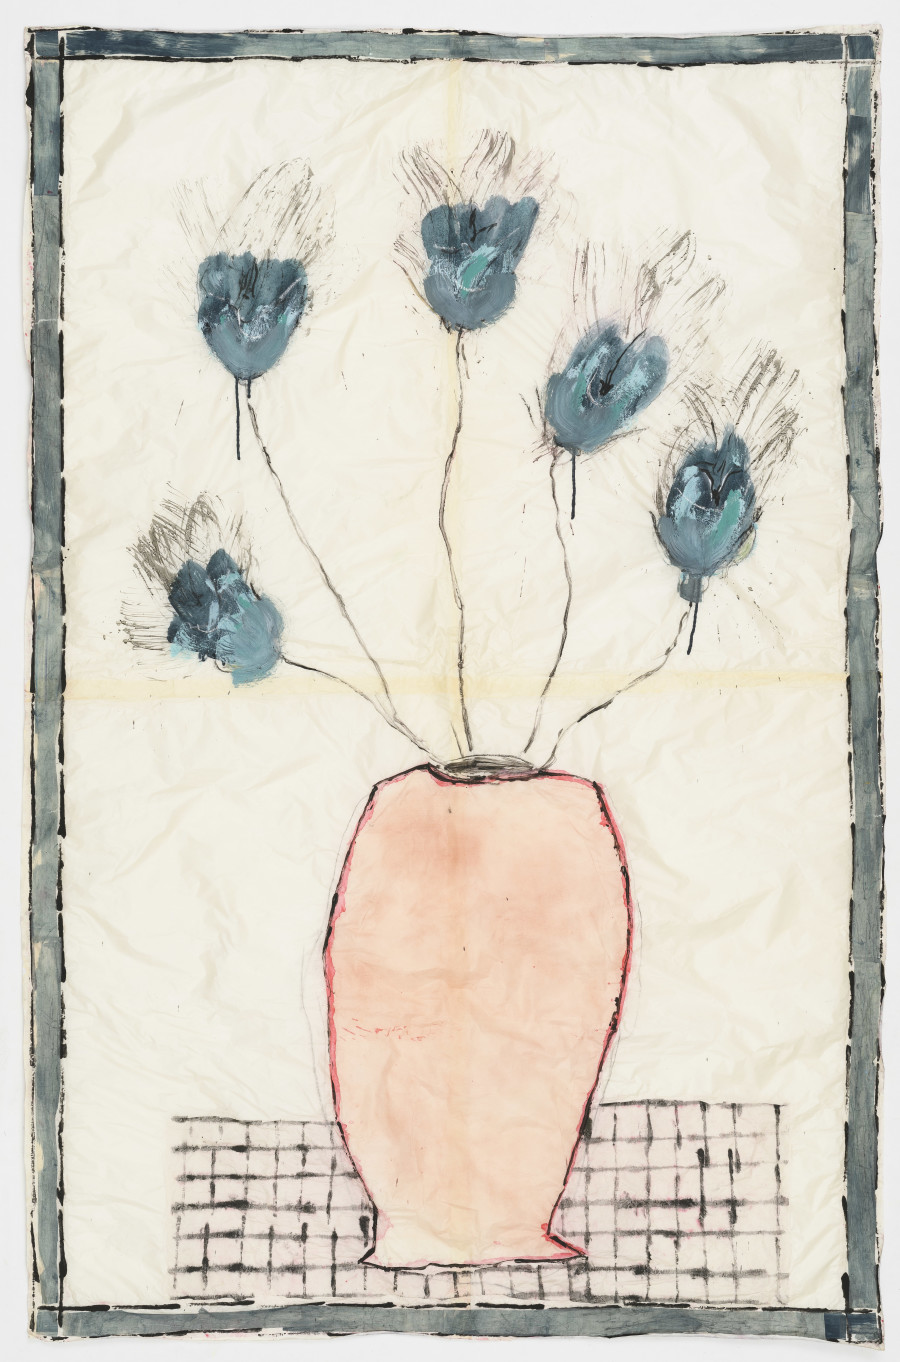 Isabella Ducrot, Big Pot VI, 2022, Pencil, collages, pigment, textile on Japan paper, 190 x 126 cm. Photo credit: Giorgio Benni